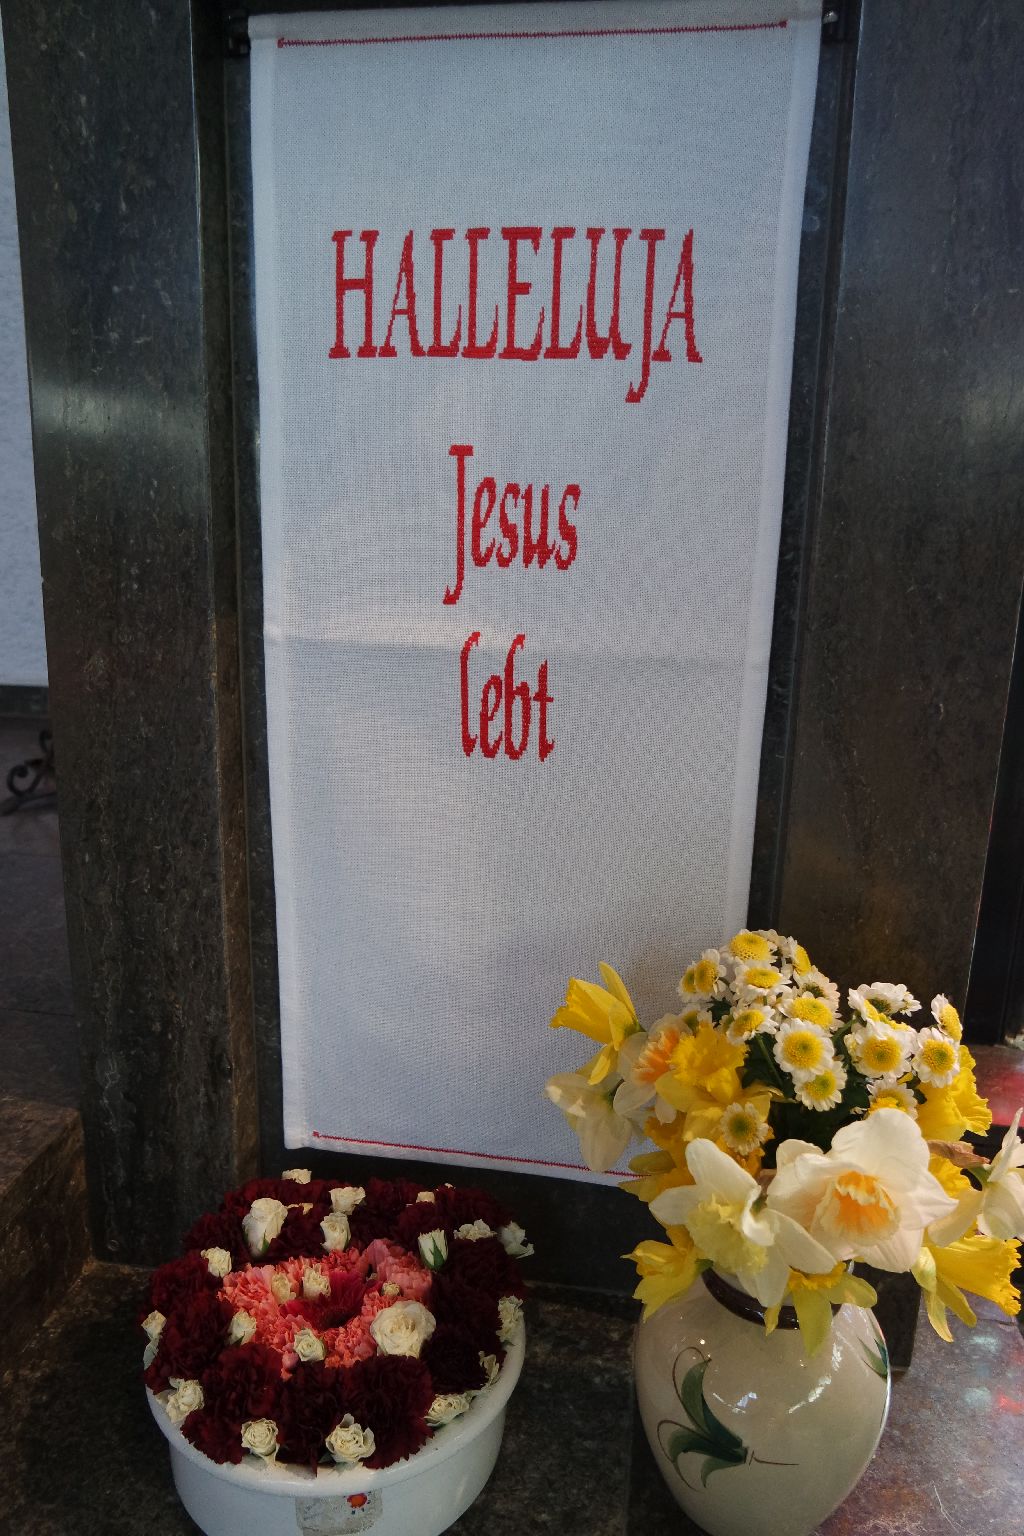 Halleluja, Jesus lebt! (c) Maria Lorenz